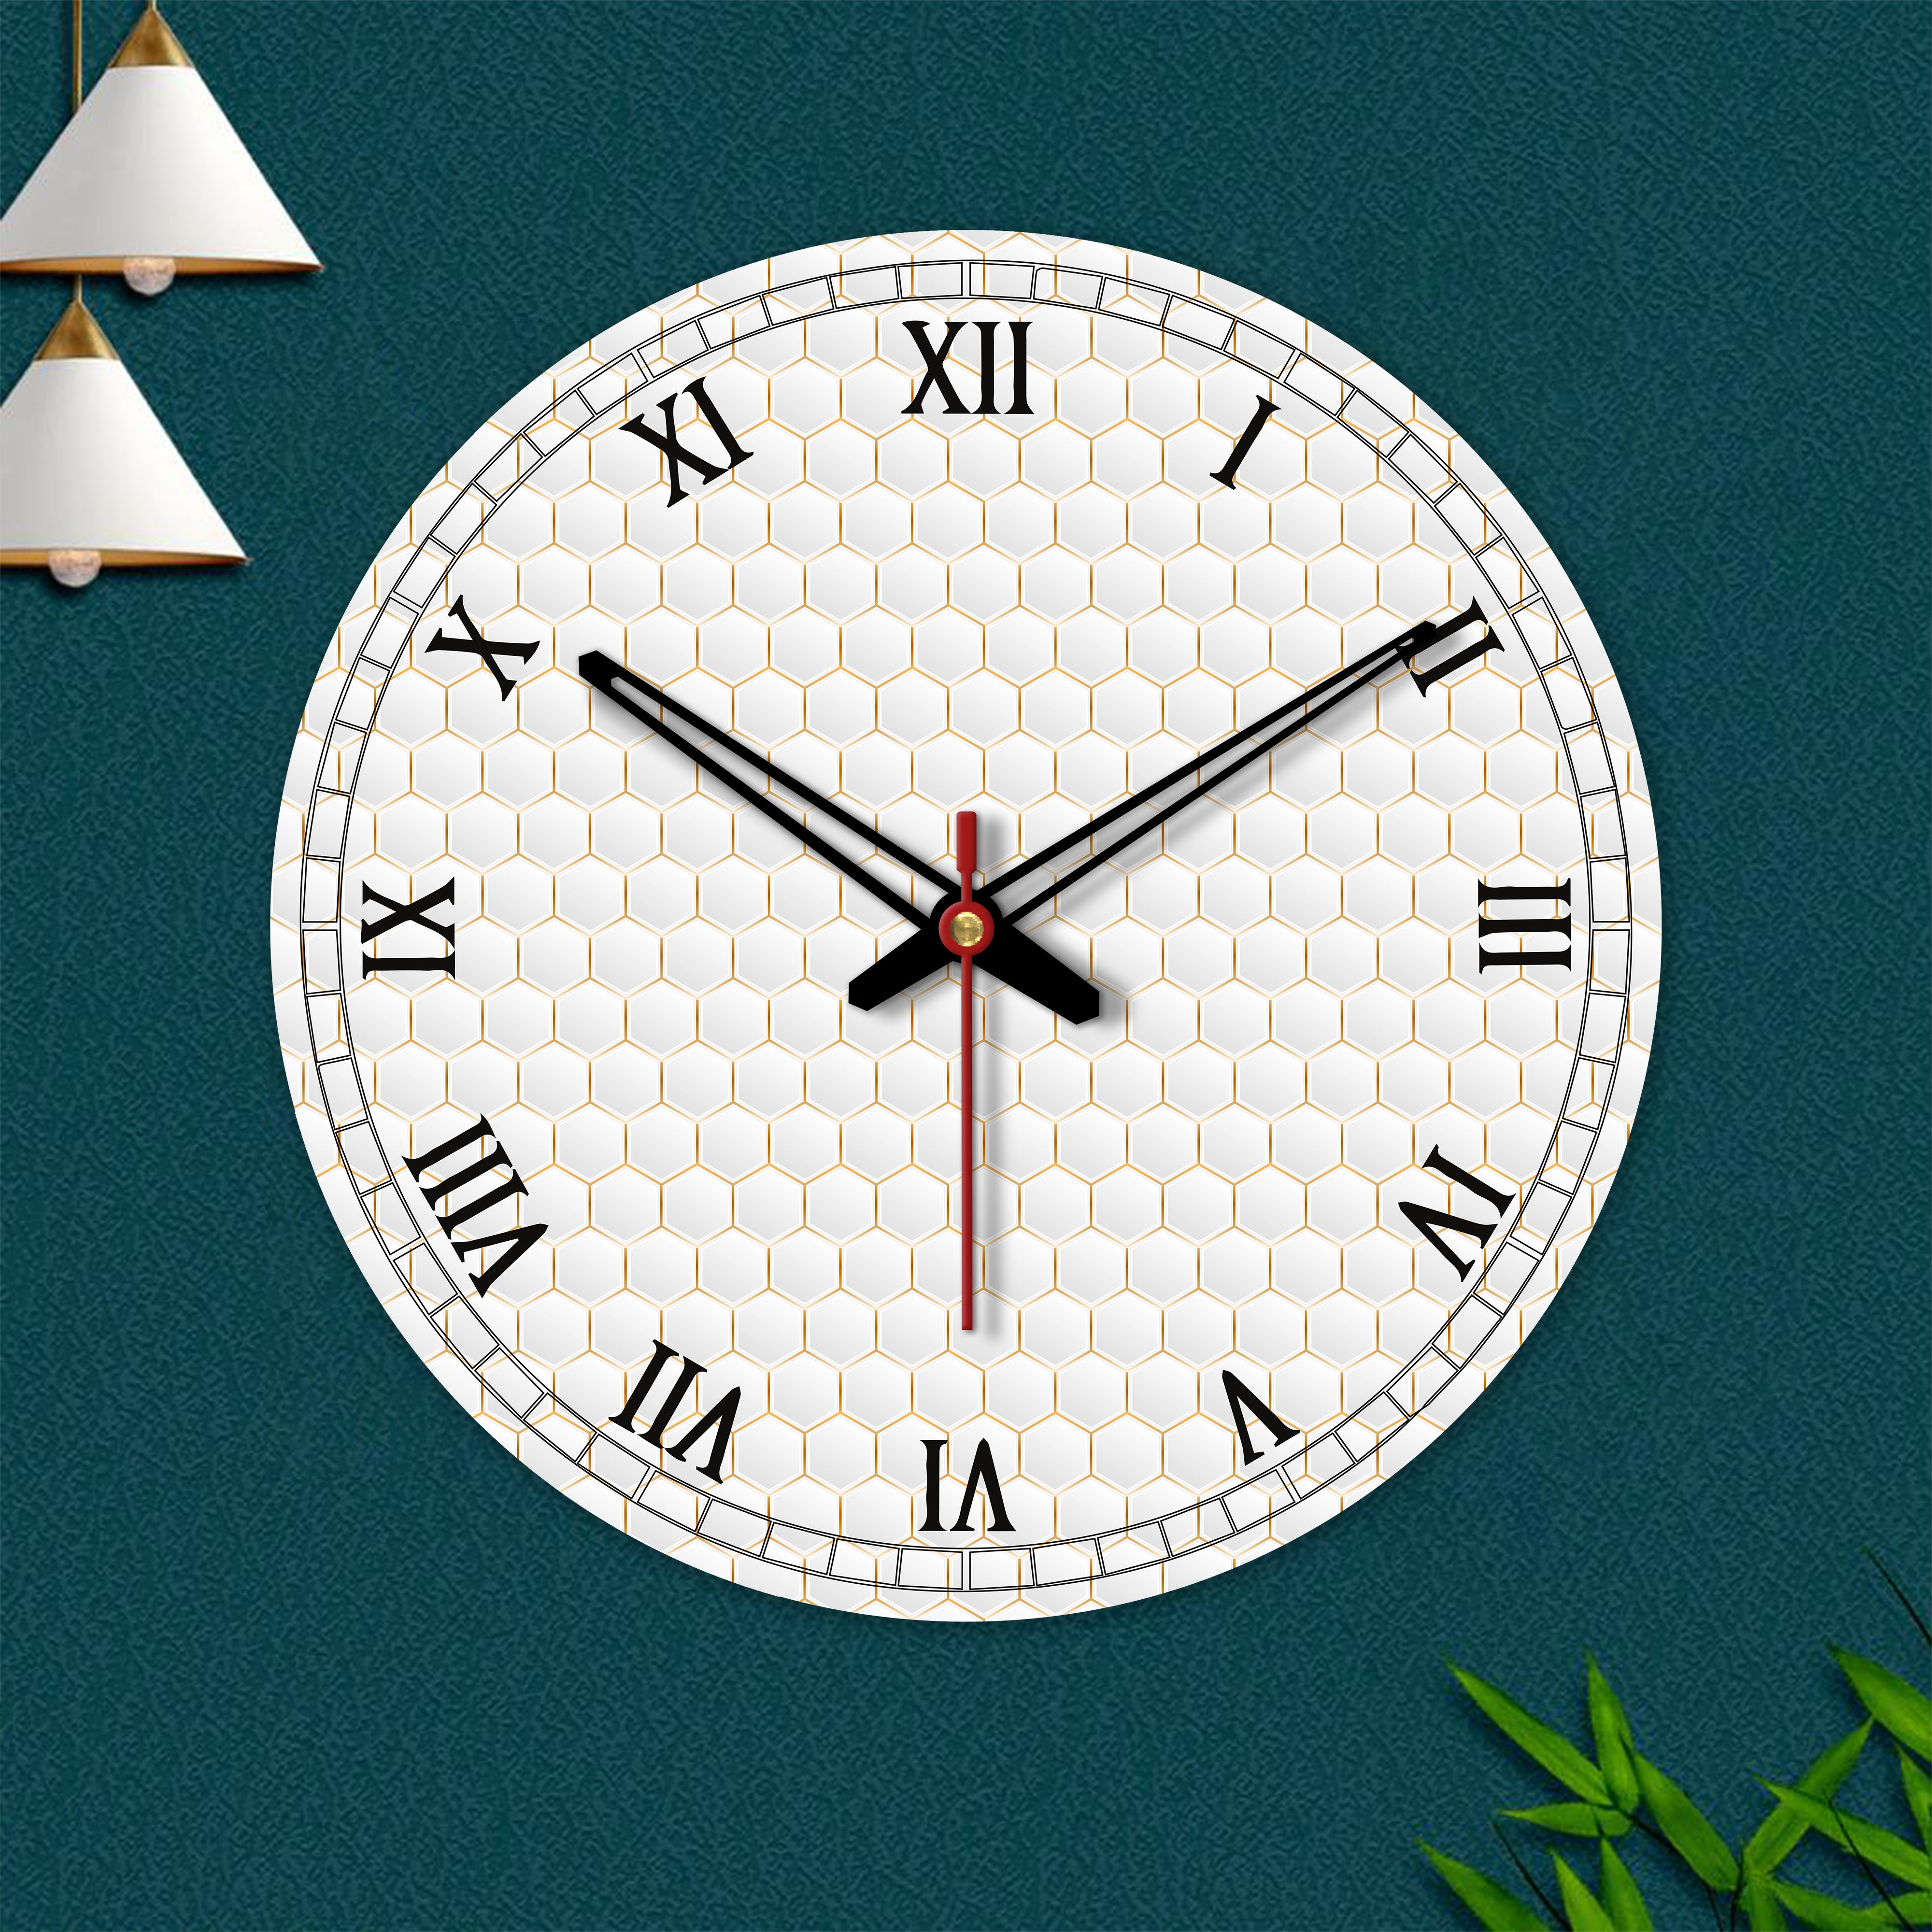 Geometrical Pattern Printed Wooden Wall Clock